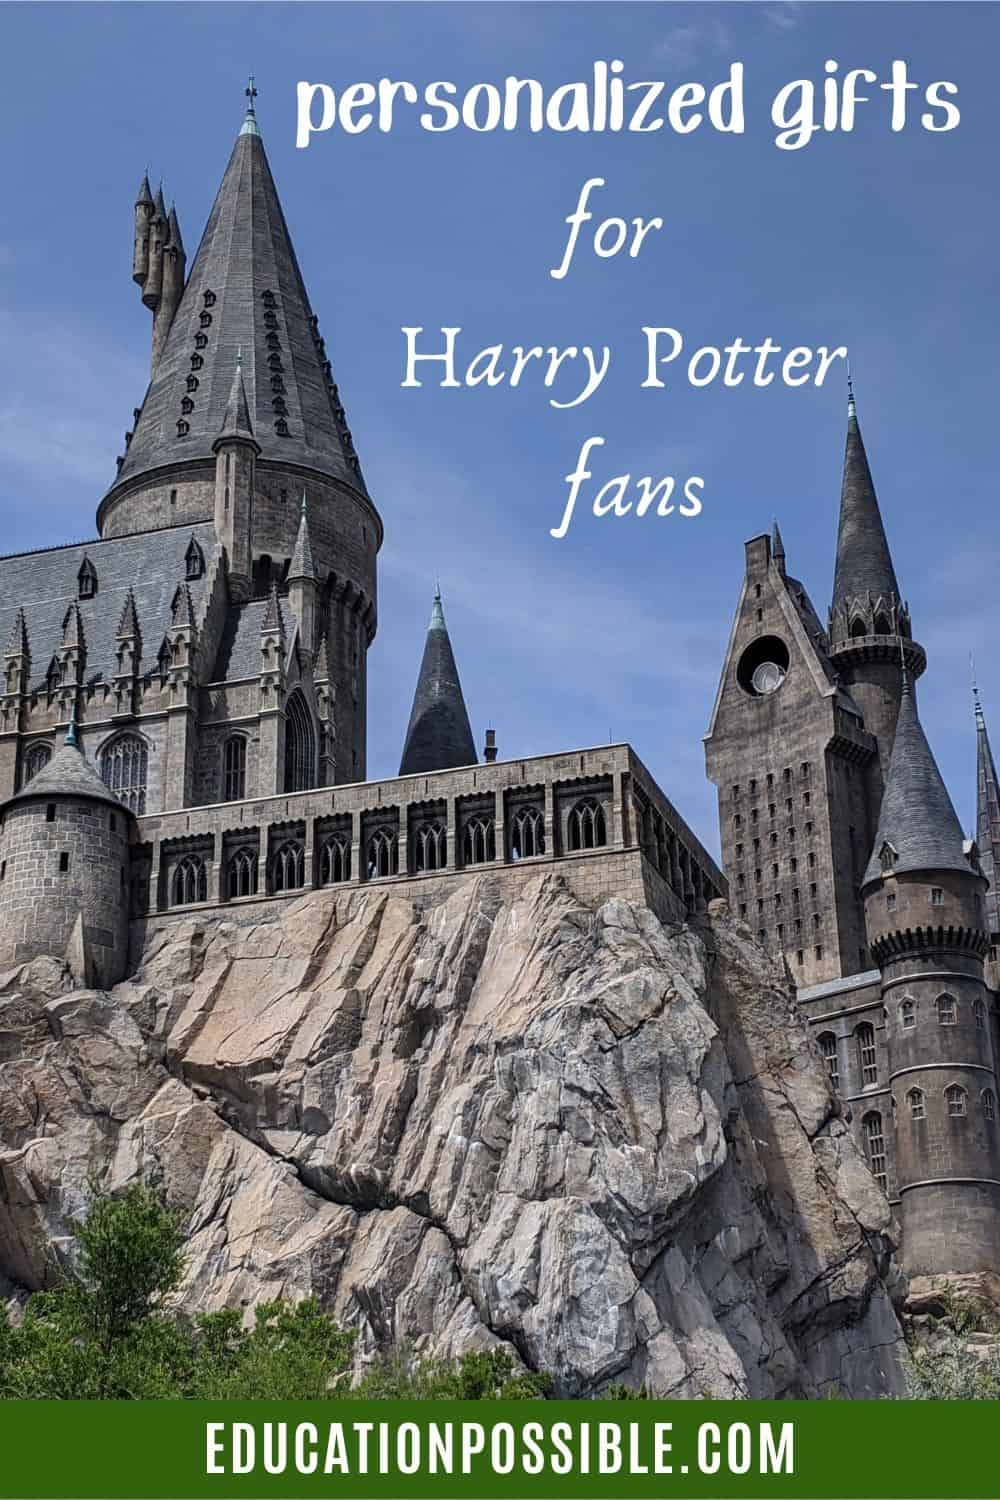 Image of Hogwarts castle in Universal Orlando